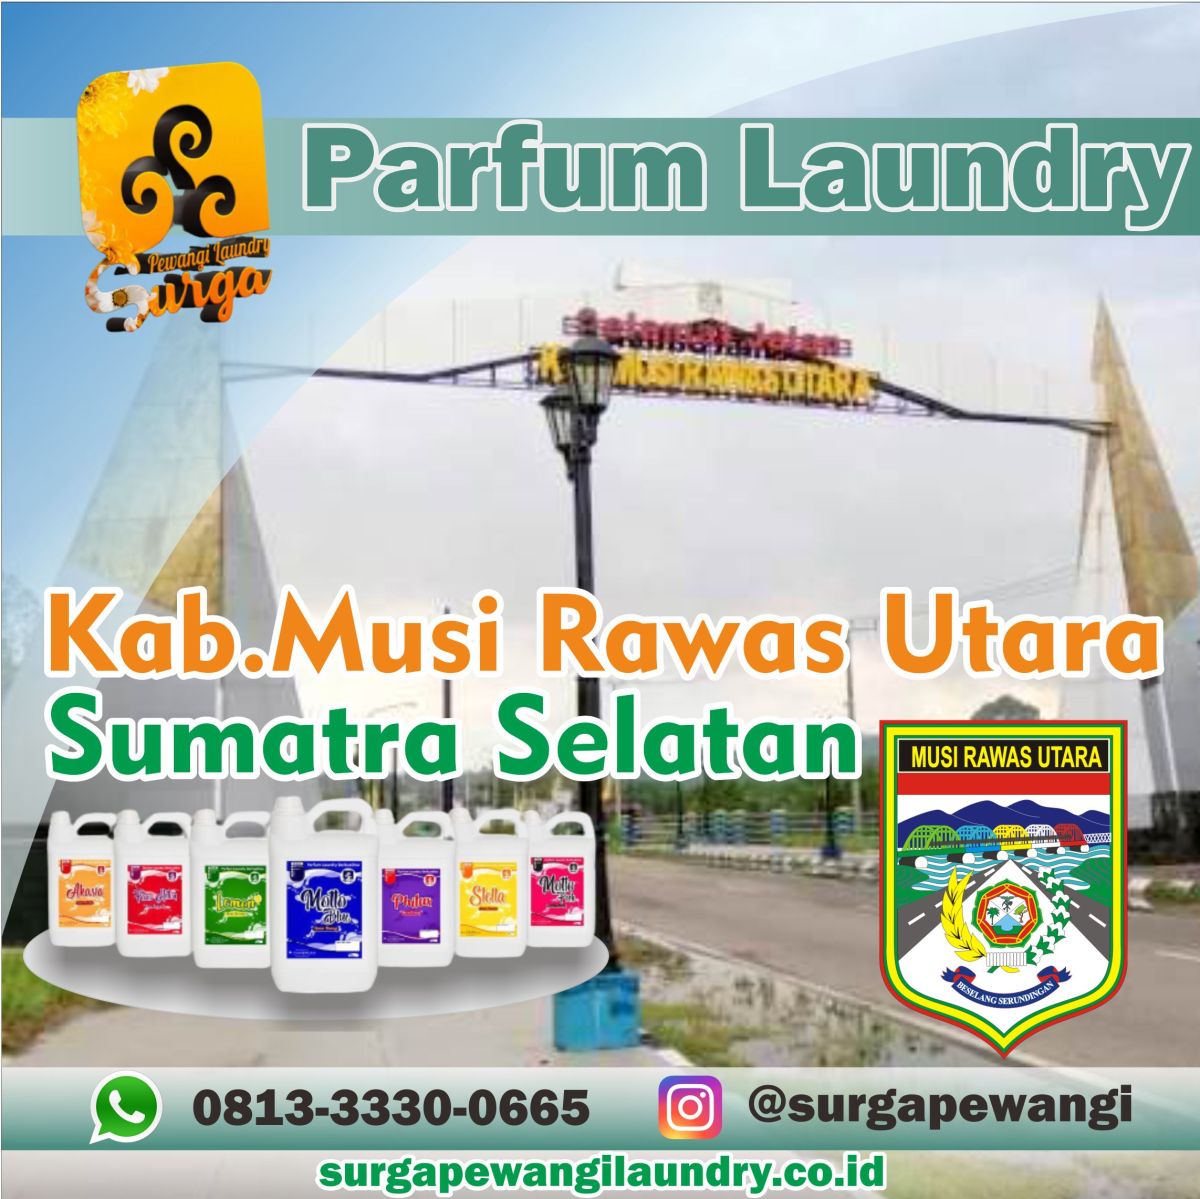 Parfum Laundry Kabupaten Musi Rawas Utara, Sumatra Selatan